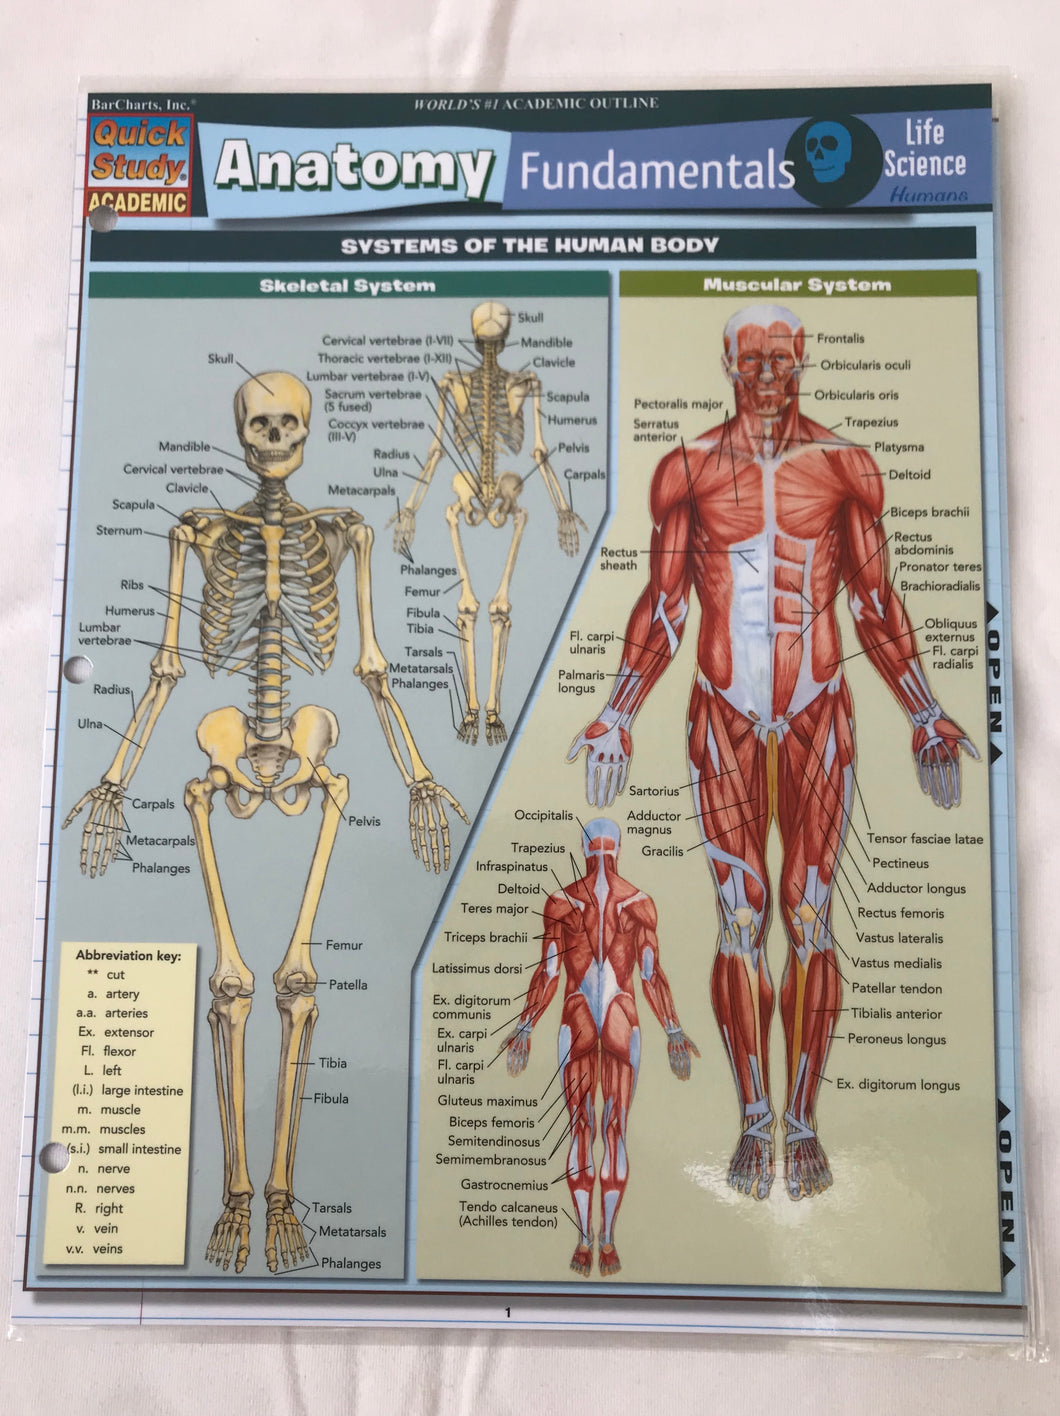 Anatomy Fundamentals: Life Science (8.5x11)